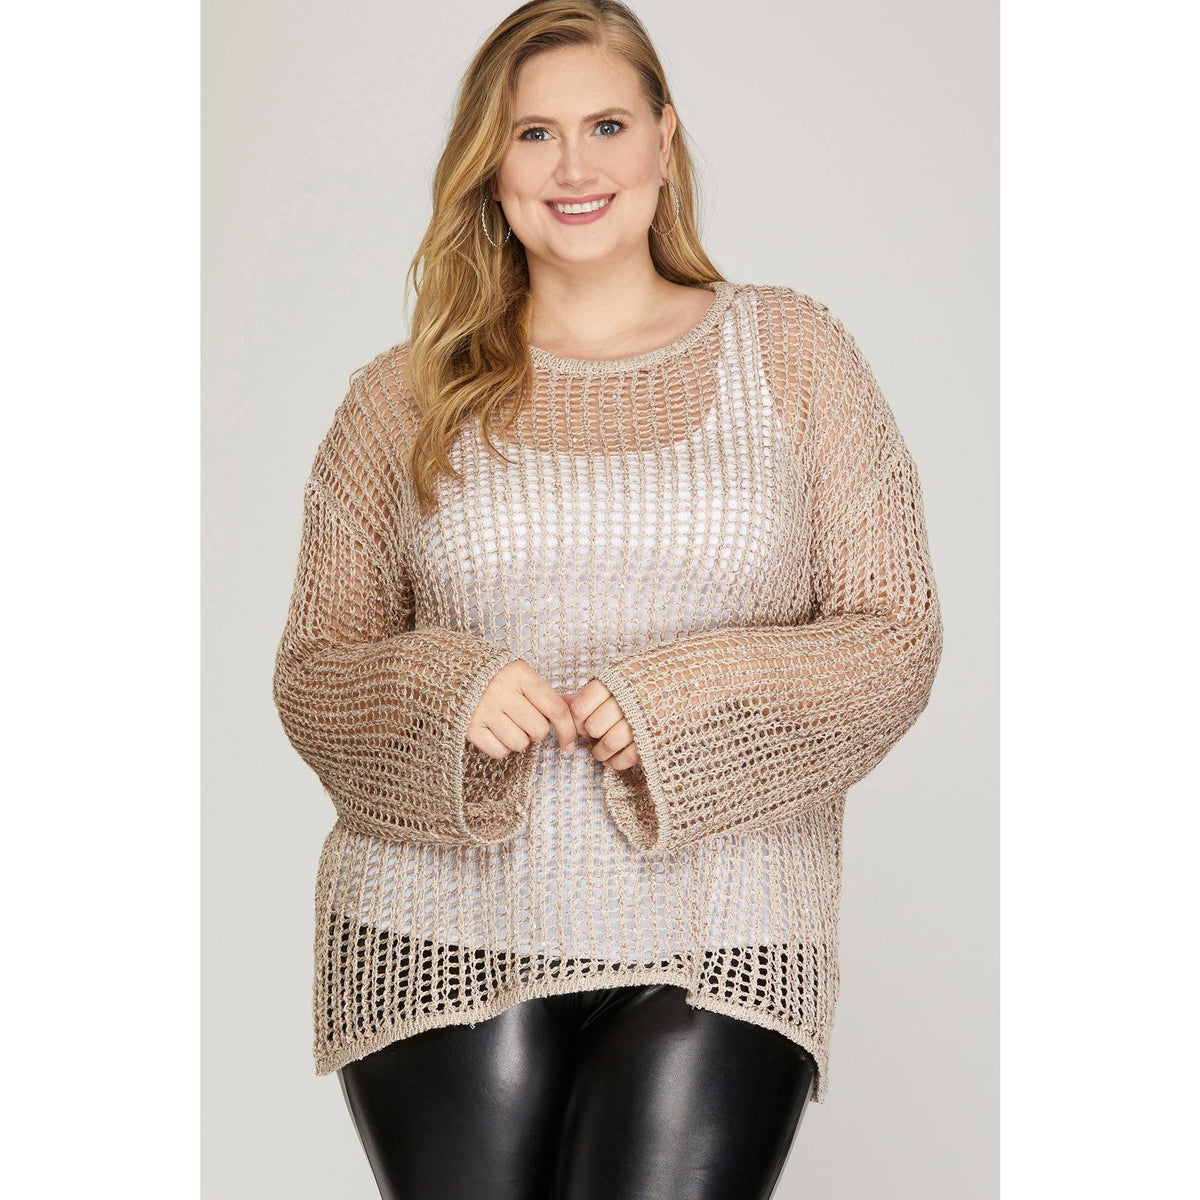 Maggie Fish-Net Sweater Top - Curvy